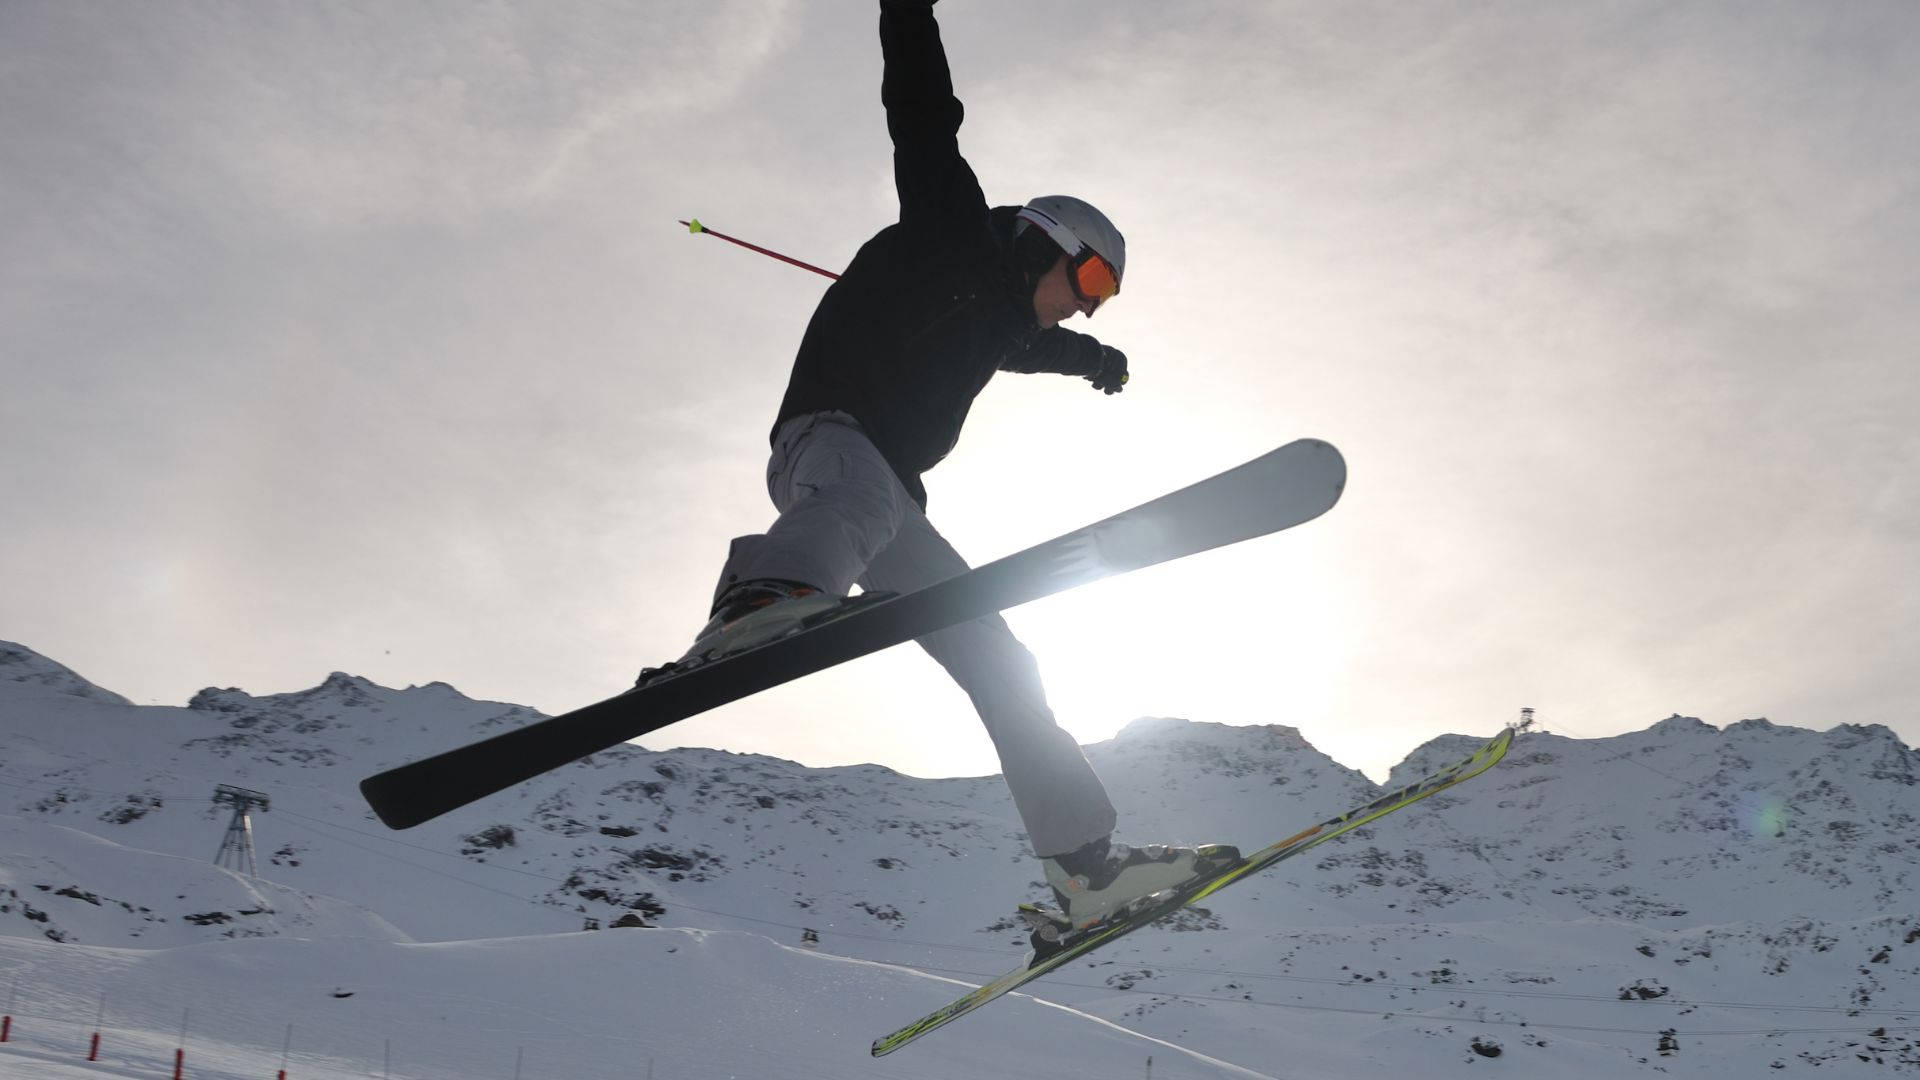 Best Ski Jumping Athlete Wallpaper